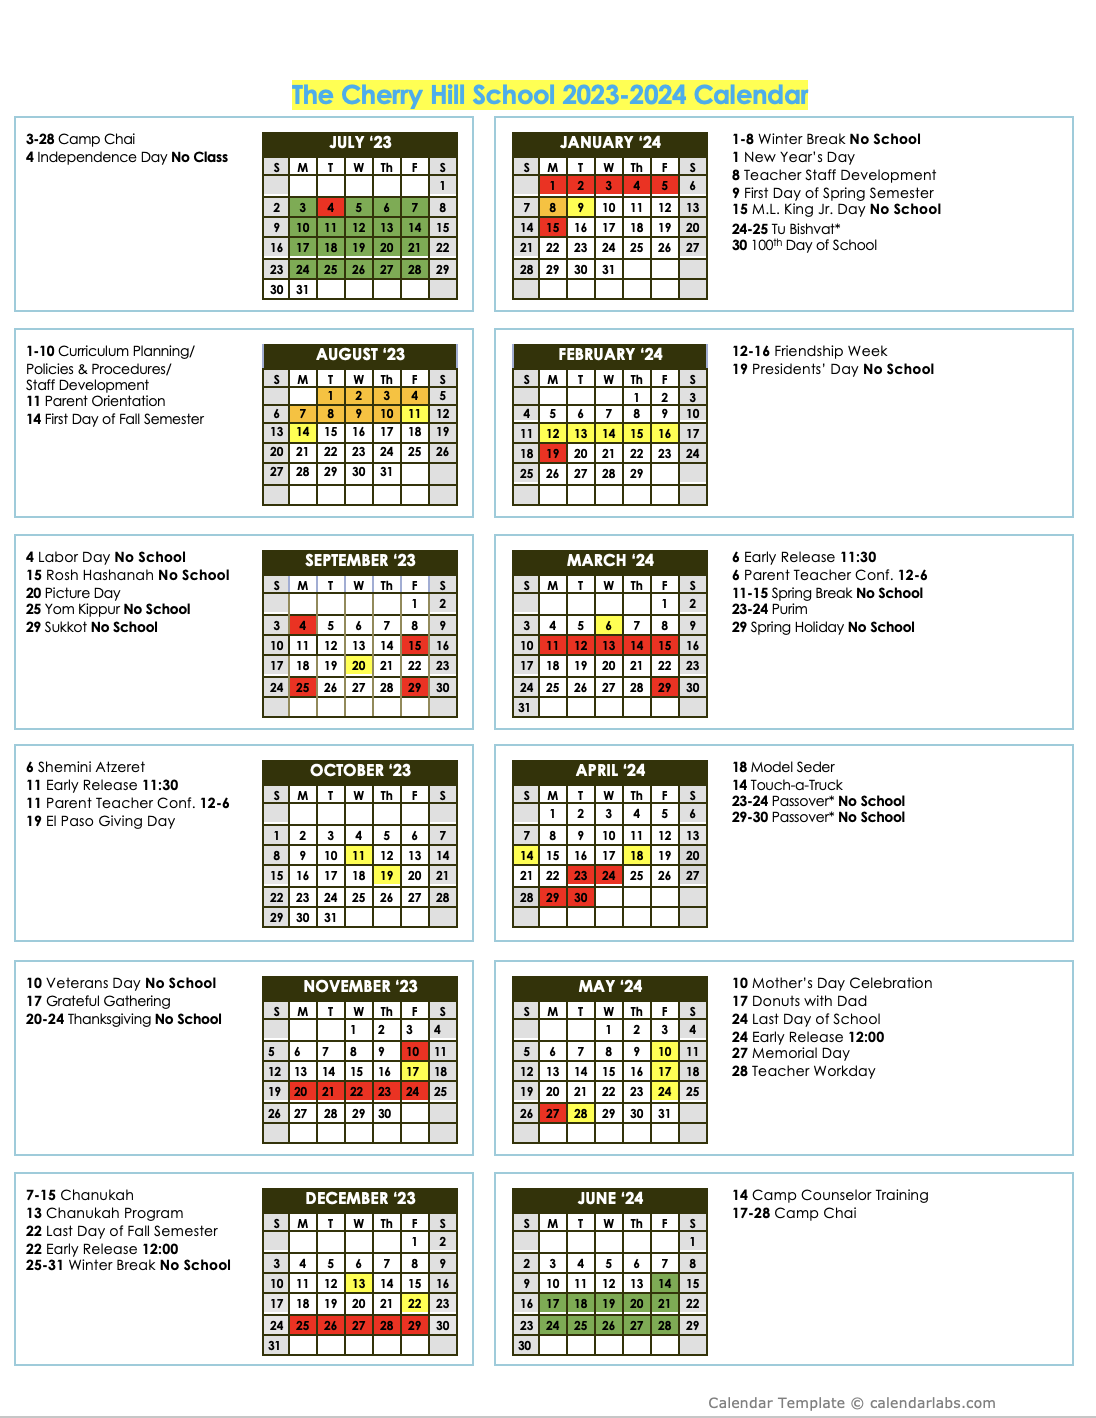 School Calendar – The Cherry Hill School